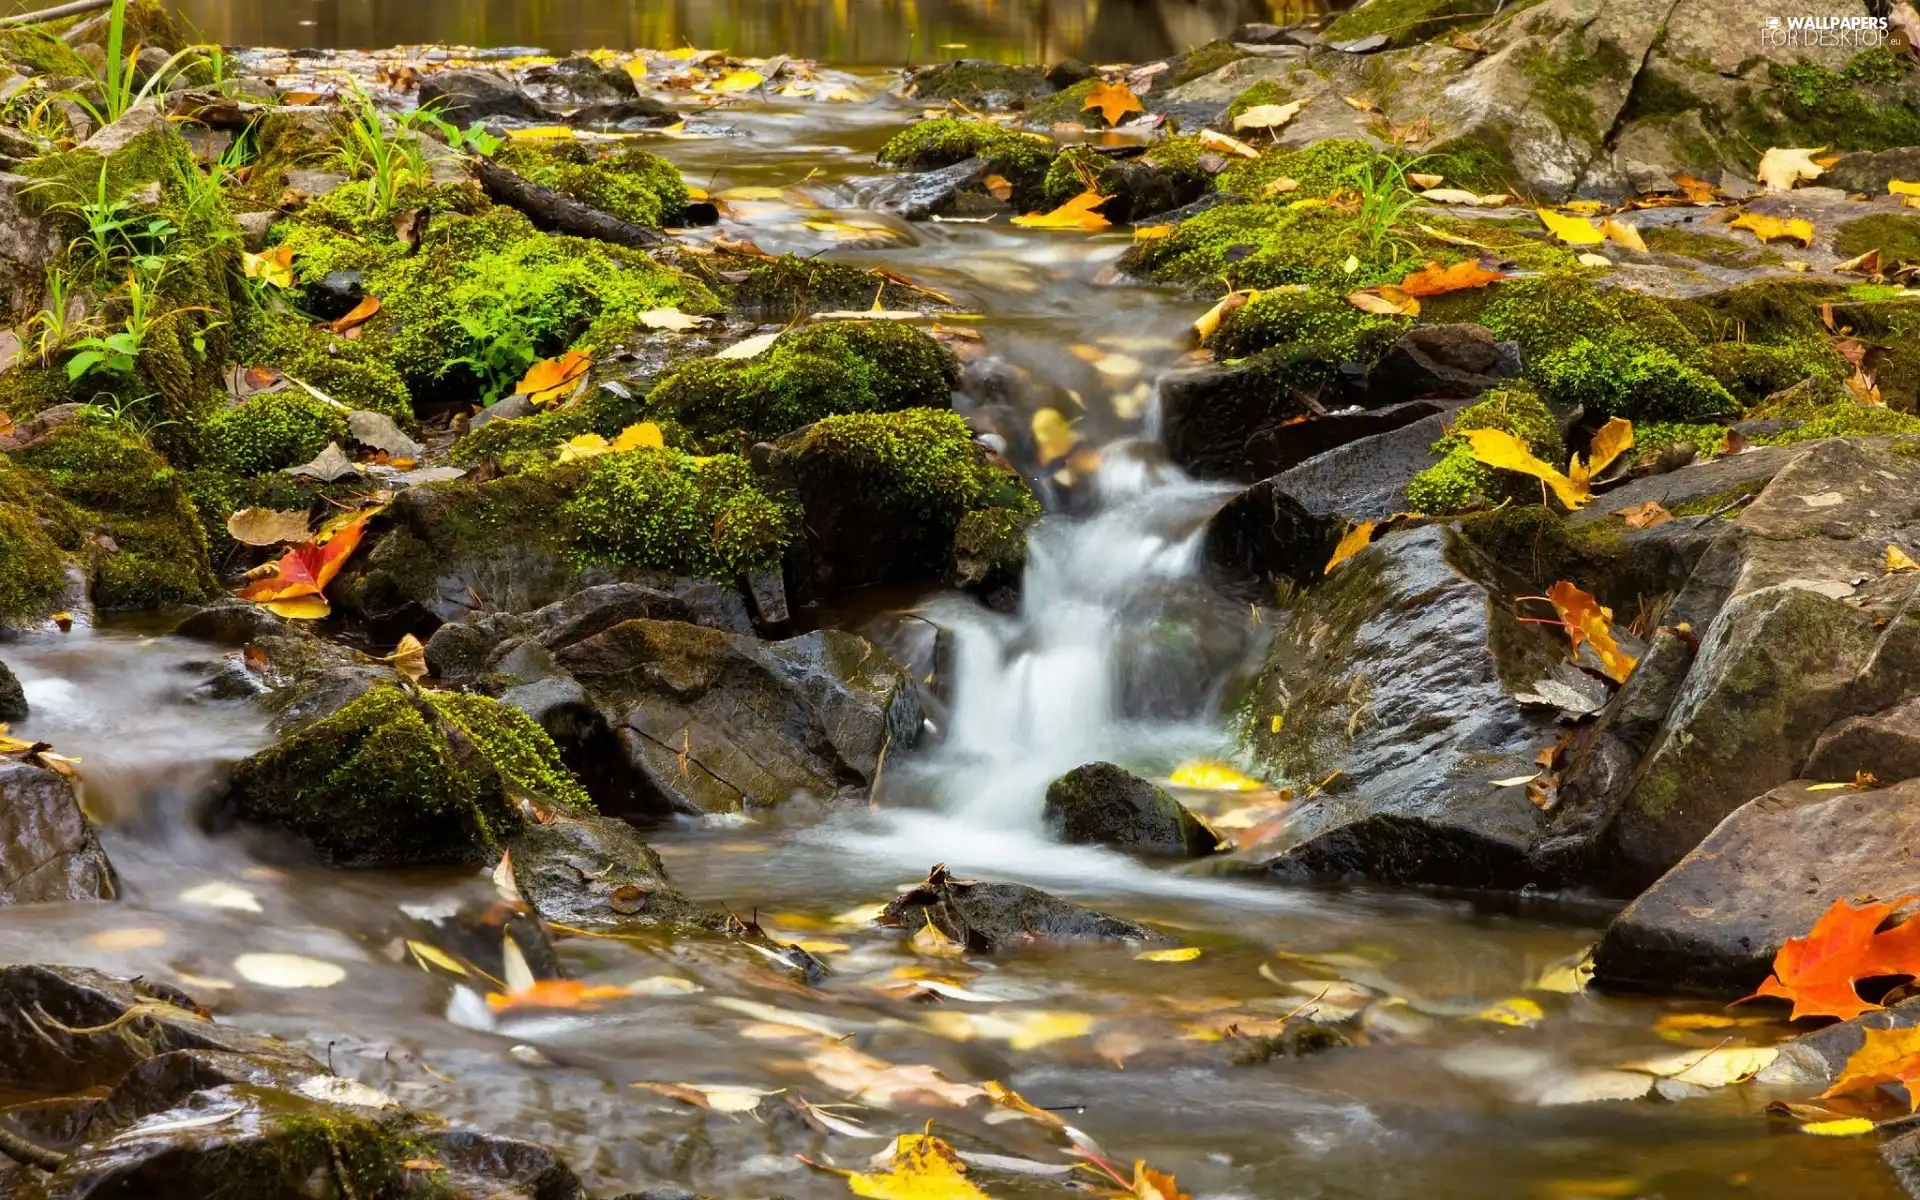 rocks, stream, Leaf, autumn, mosses, forest